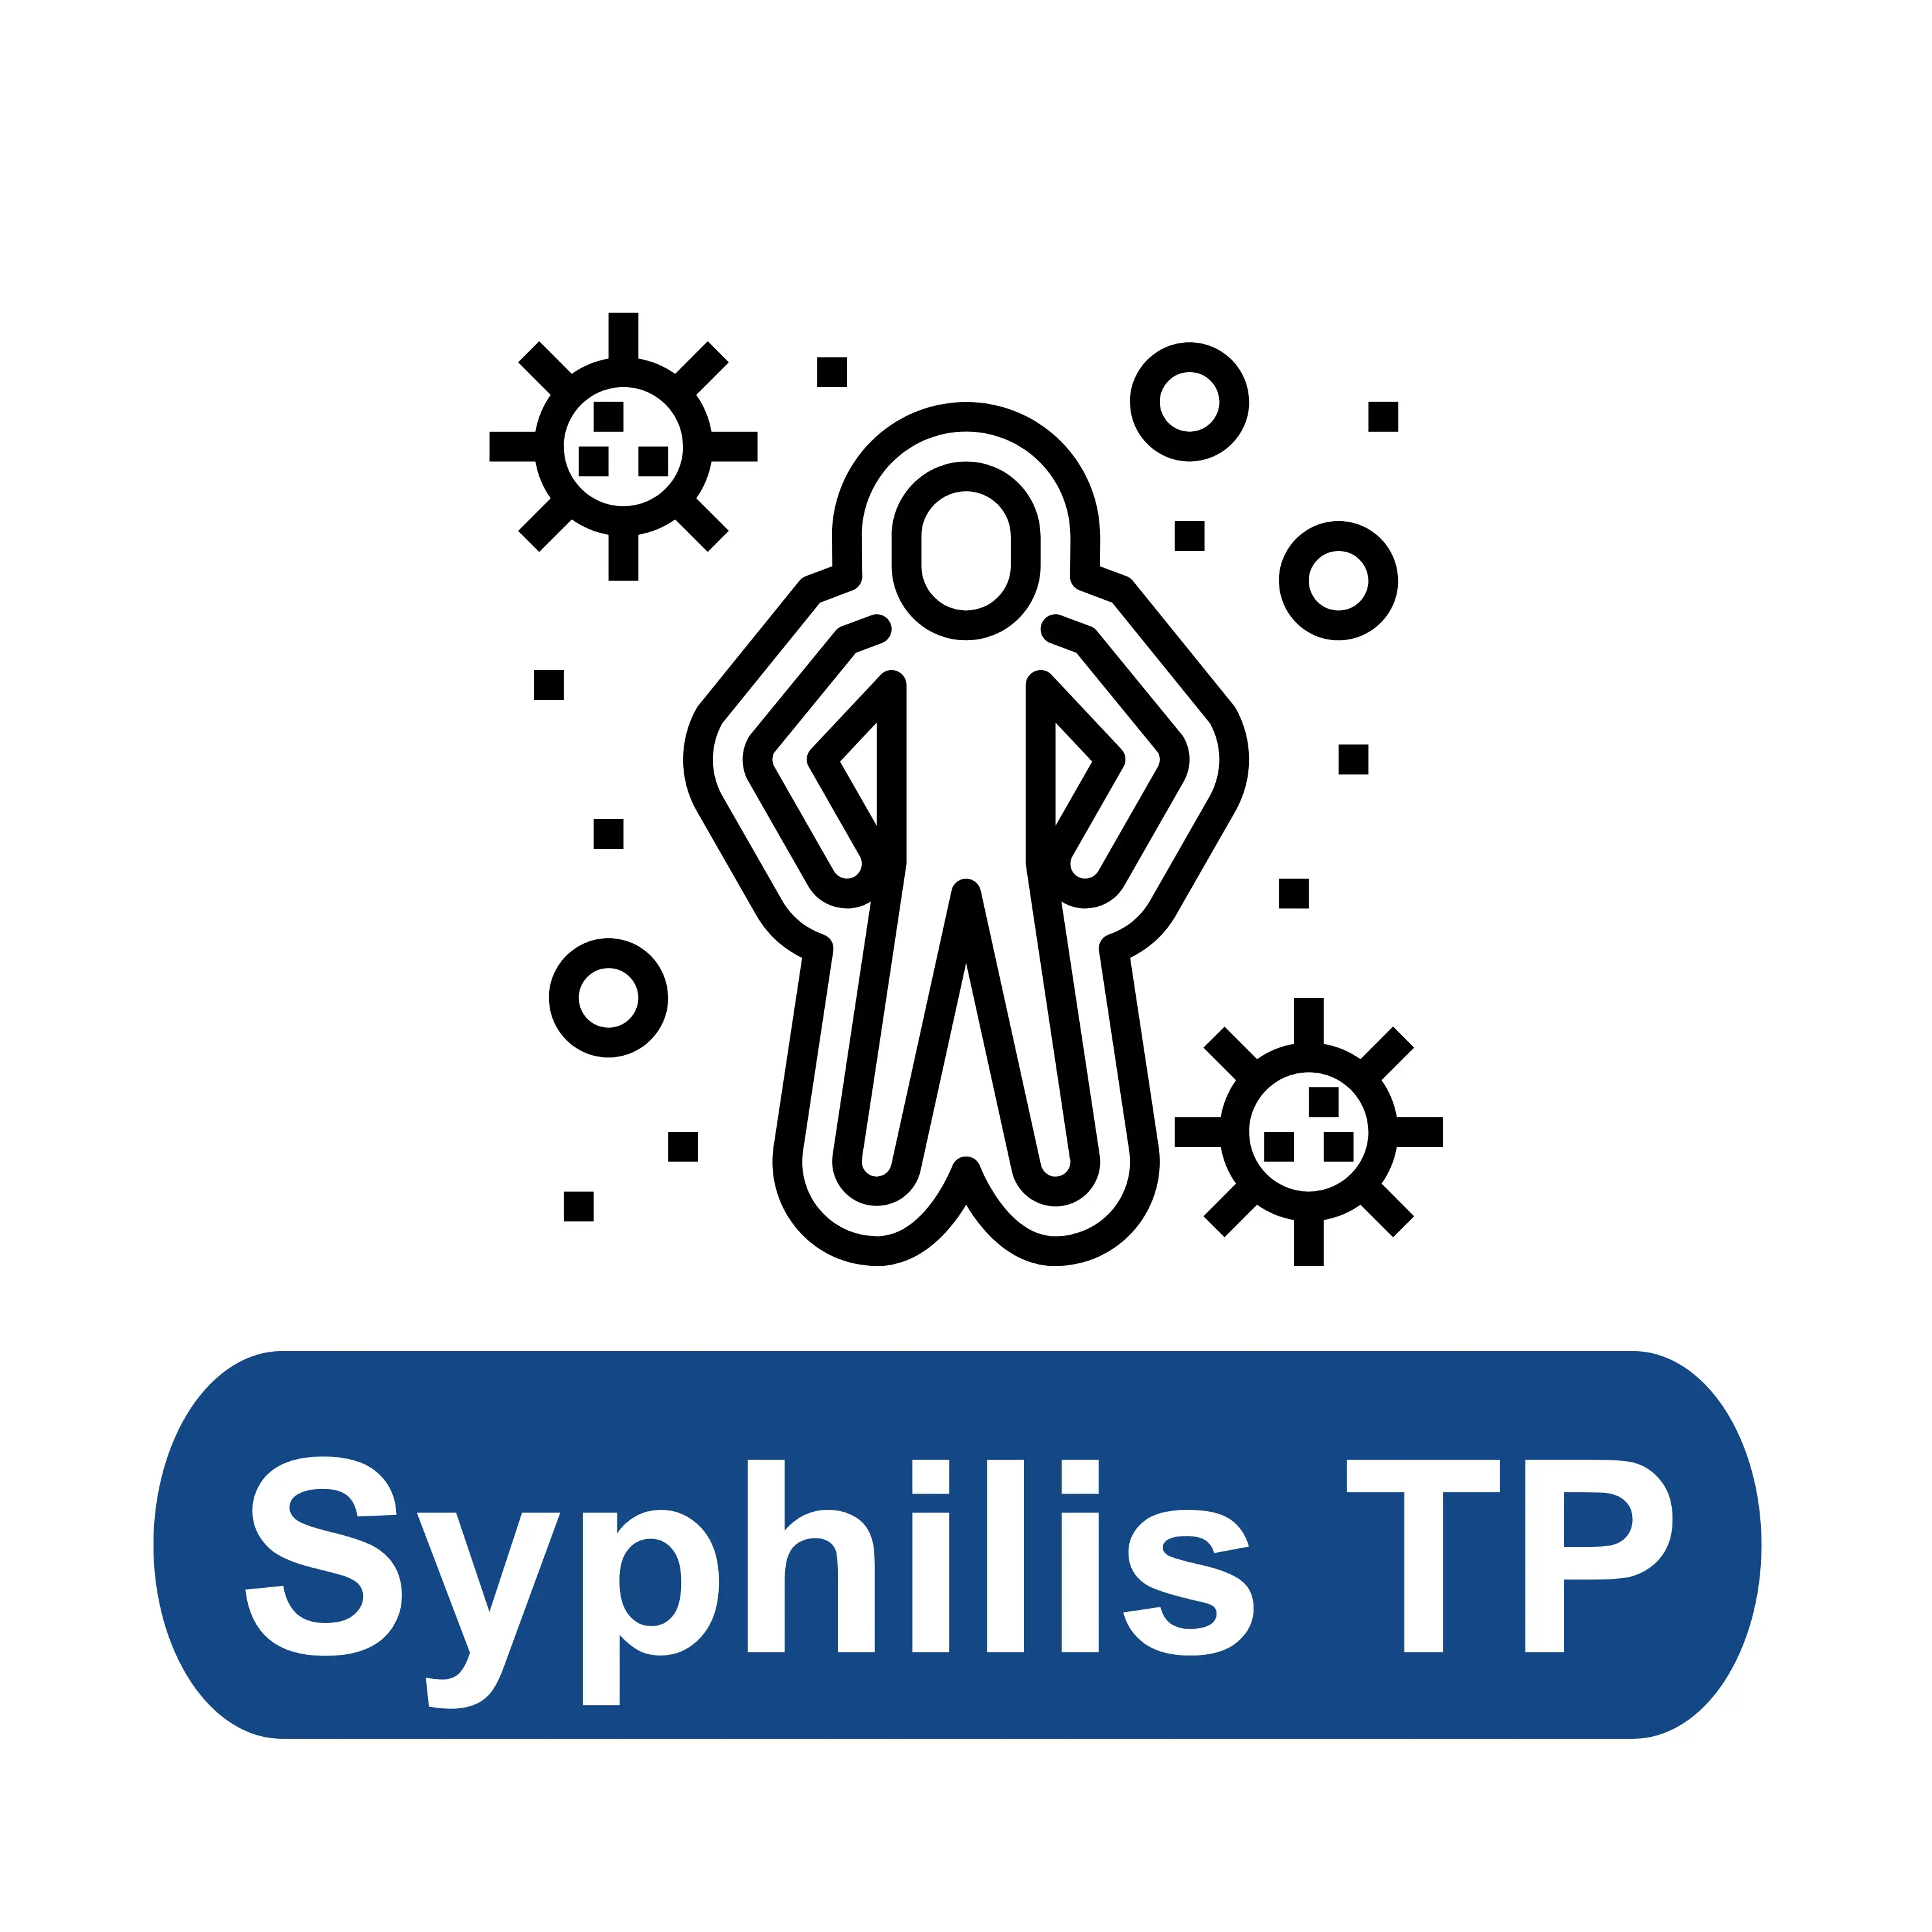 Syphilis TP